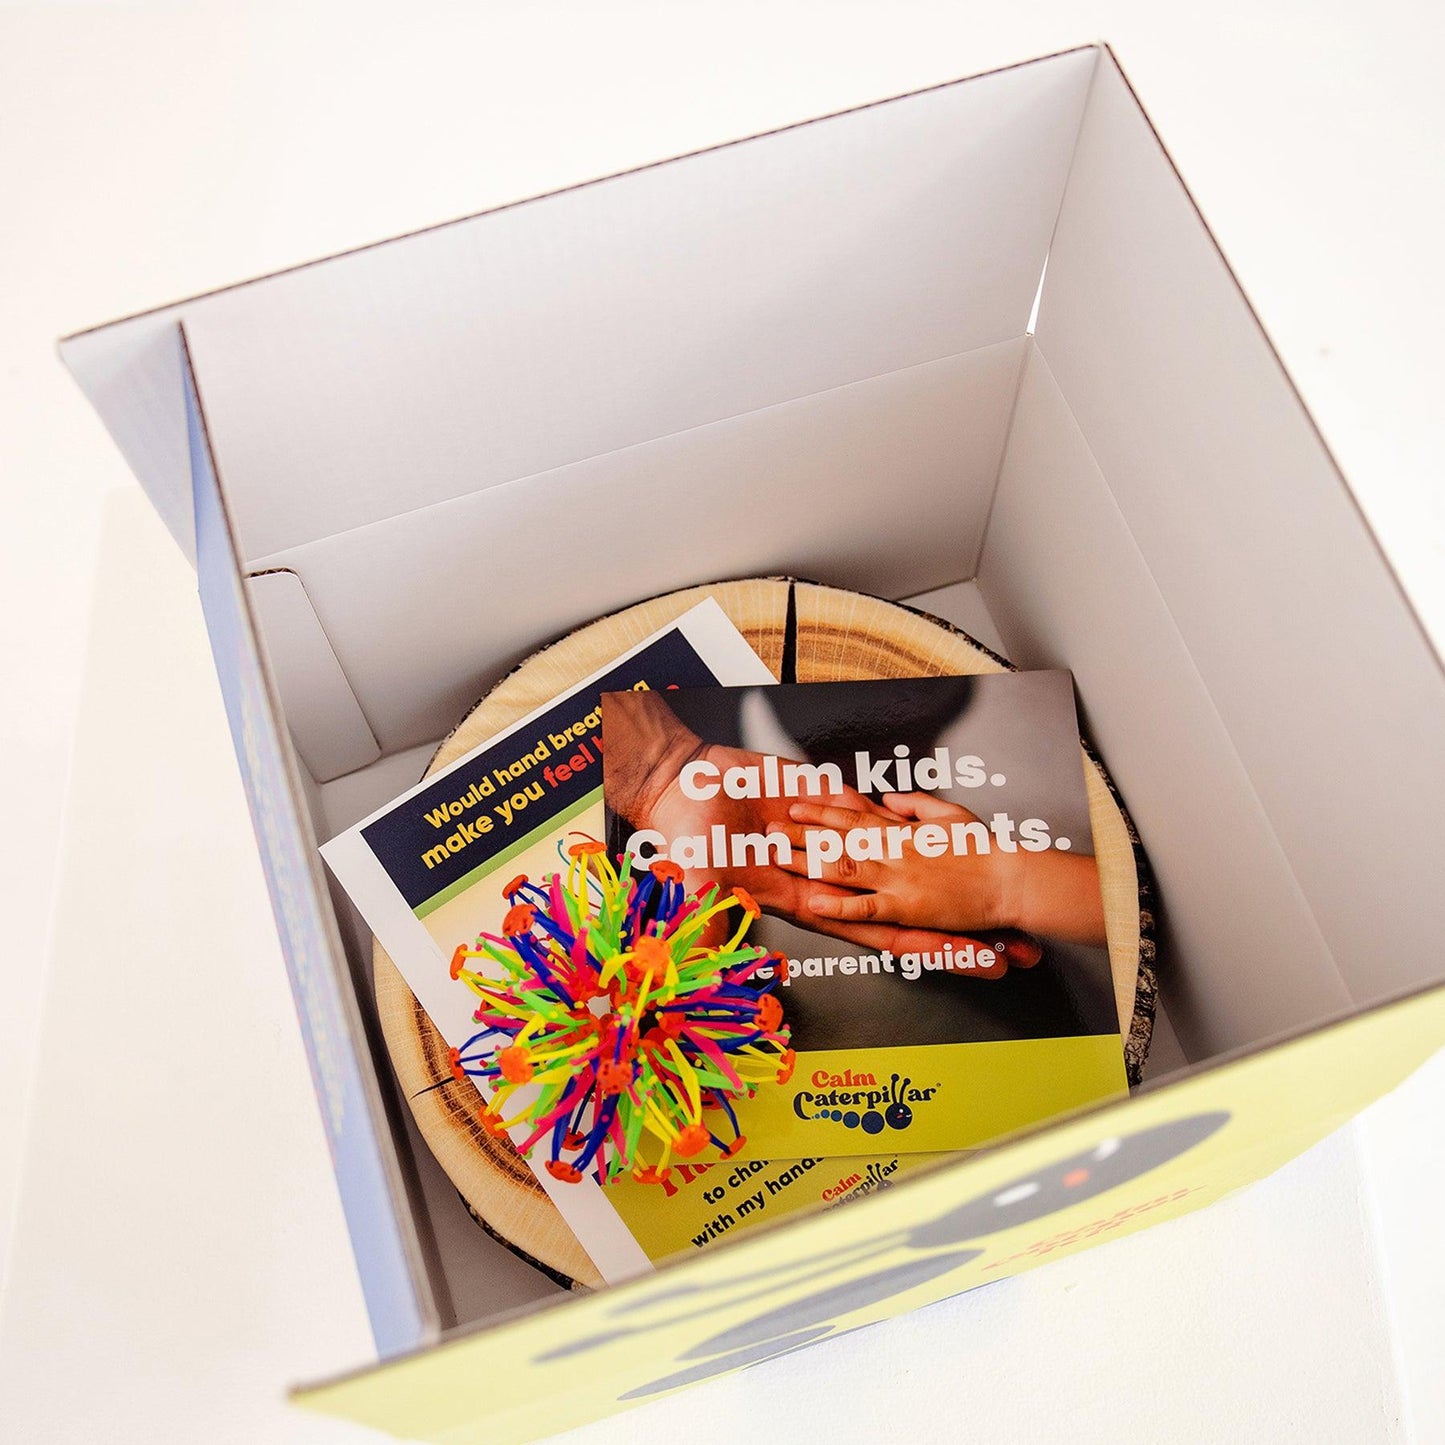 Calm Corner Kit for Kids - Loomini